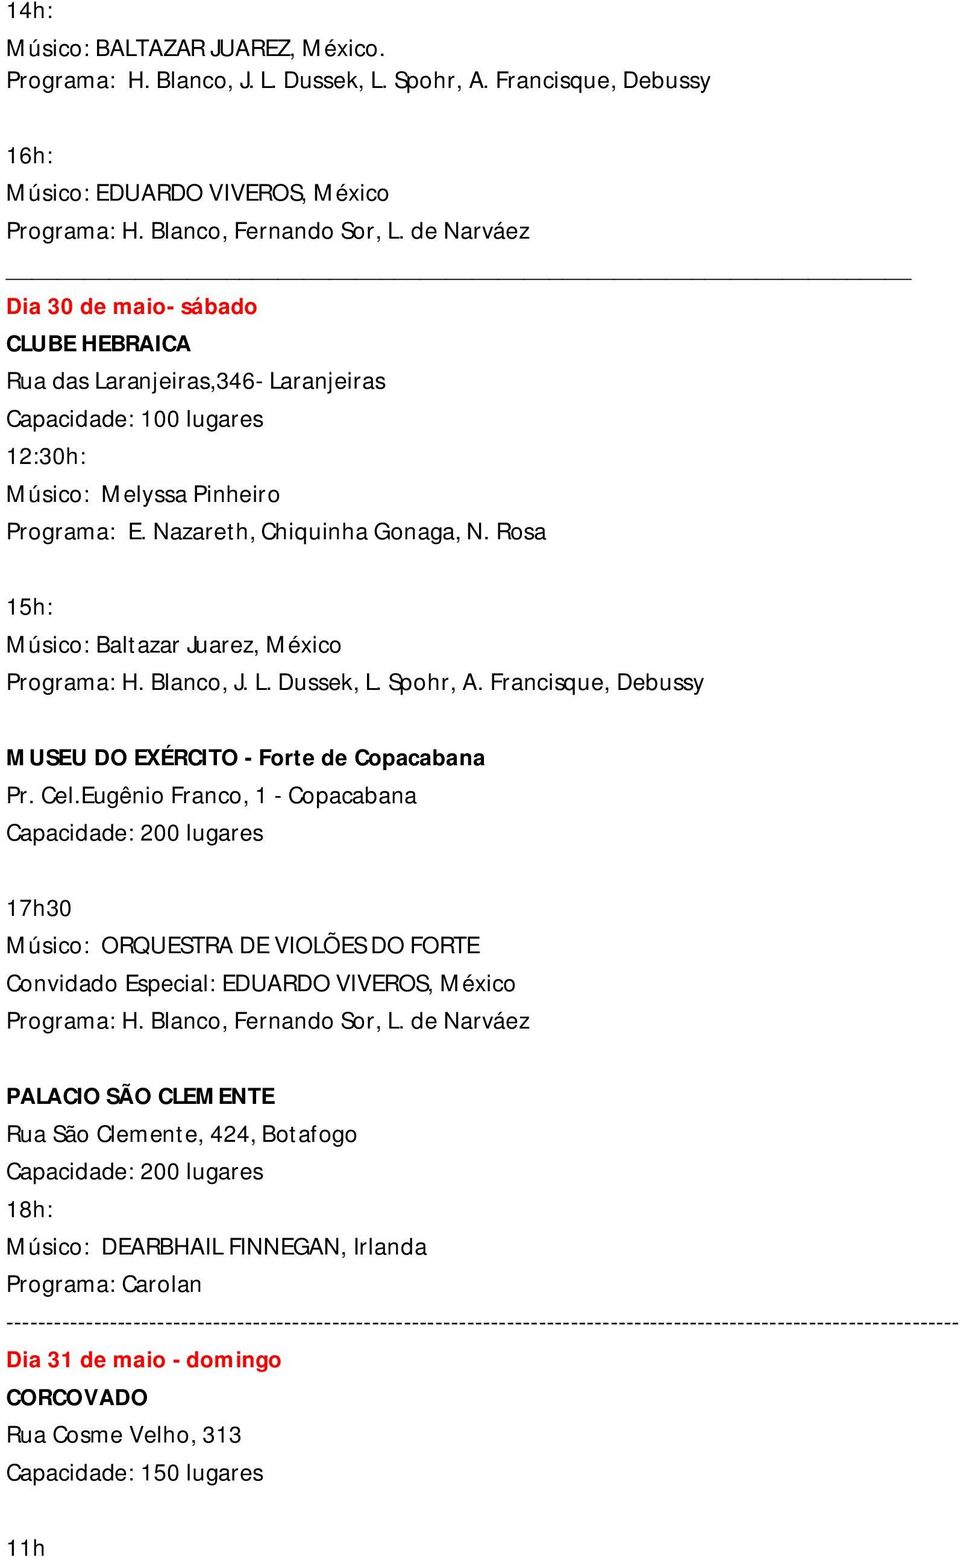 Rosa 15h: Músico: Baltazar Juarez, México H. Blanco, J. L. Dussek, L. Spohr, A. Francisque, Debussy MUSEU DO EXÉRCITO - Forte de Copacabana Pr. Cel.